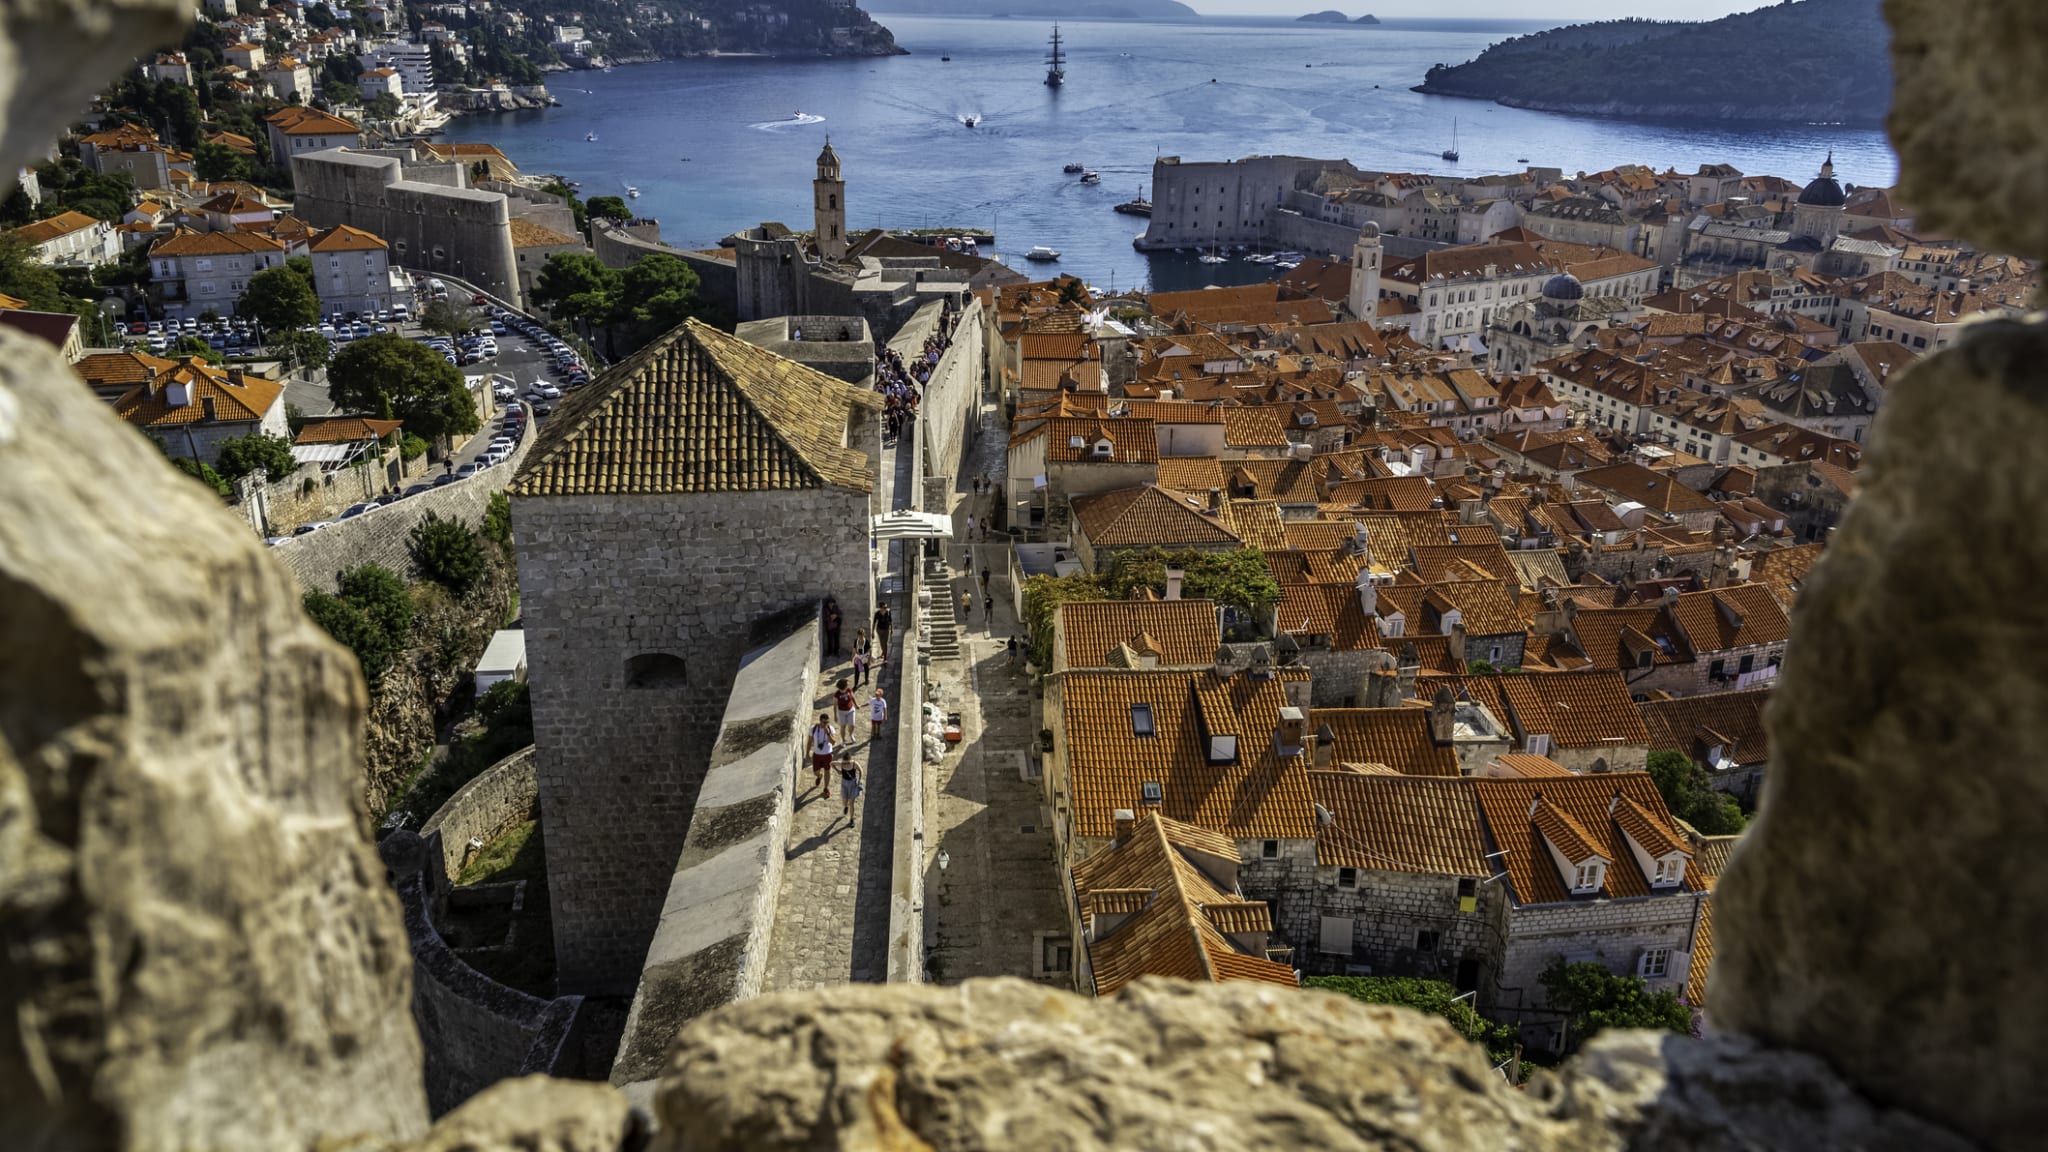 Dubrovnik, Kroatien © Sasipa Muennuch/Moment via Getty Images